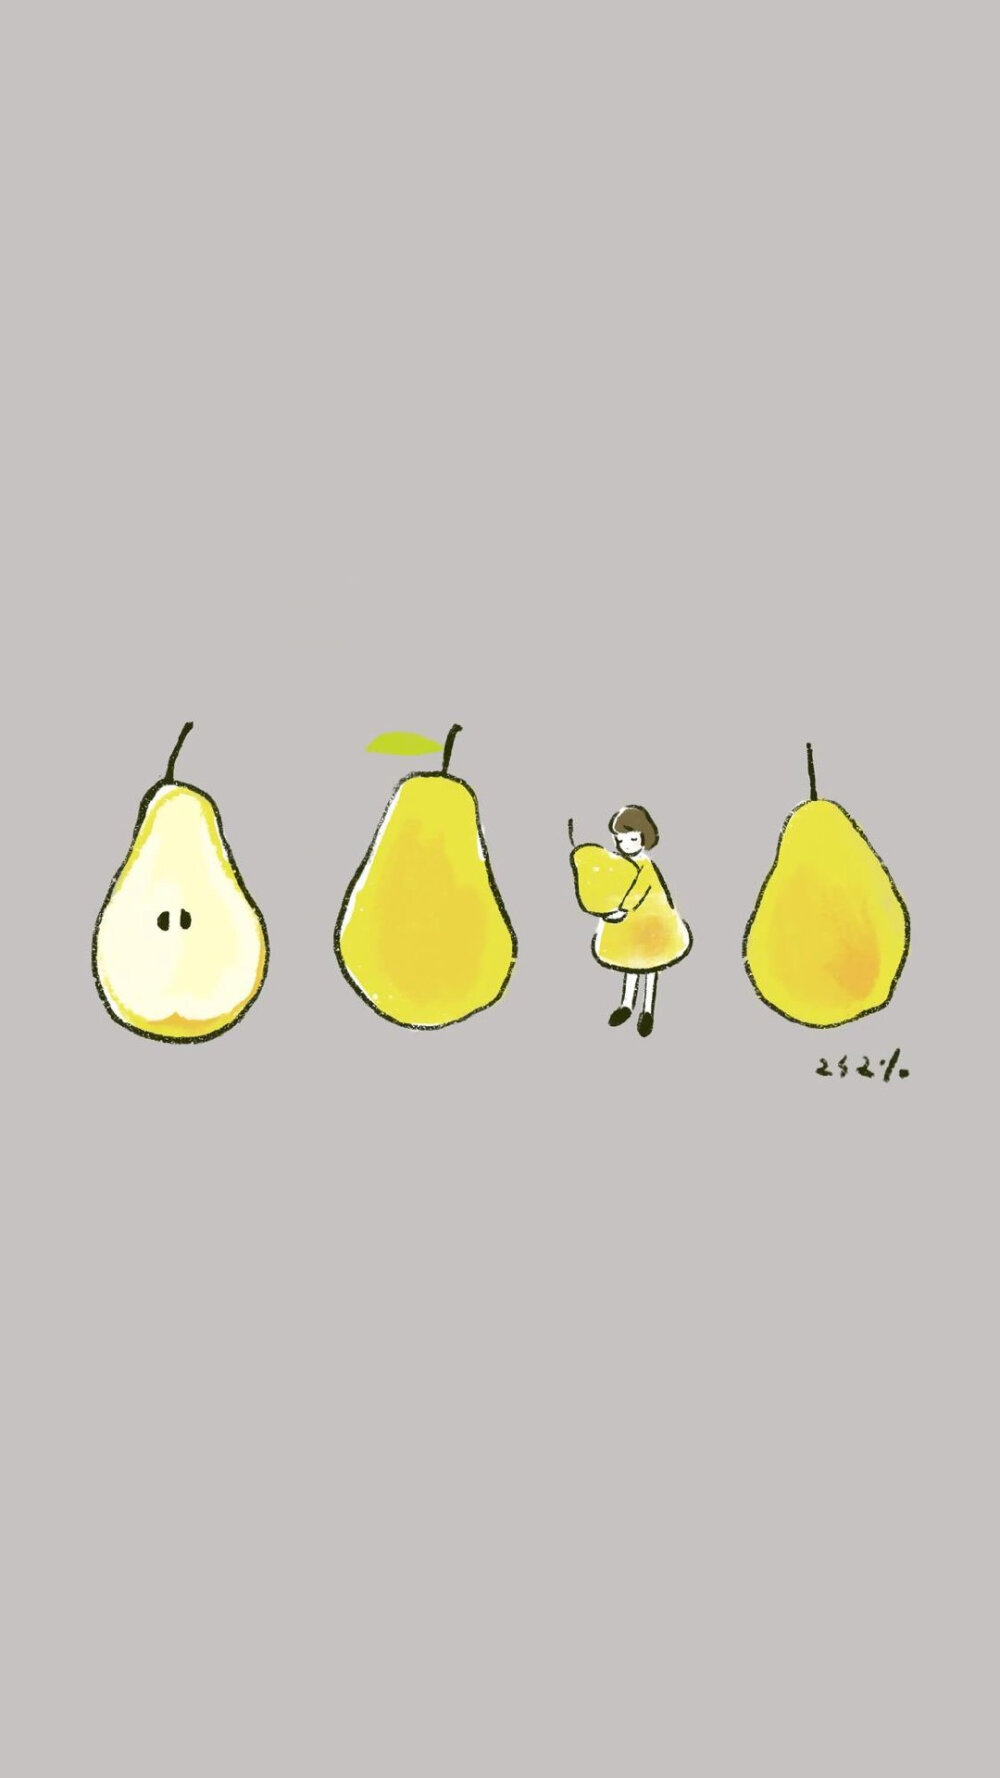 pears
252%